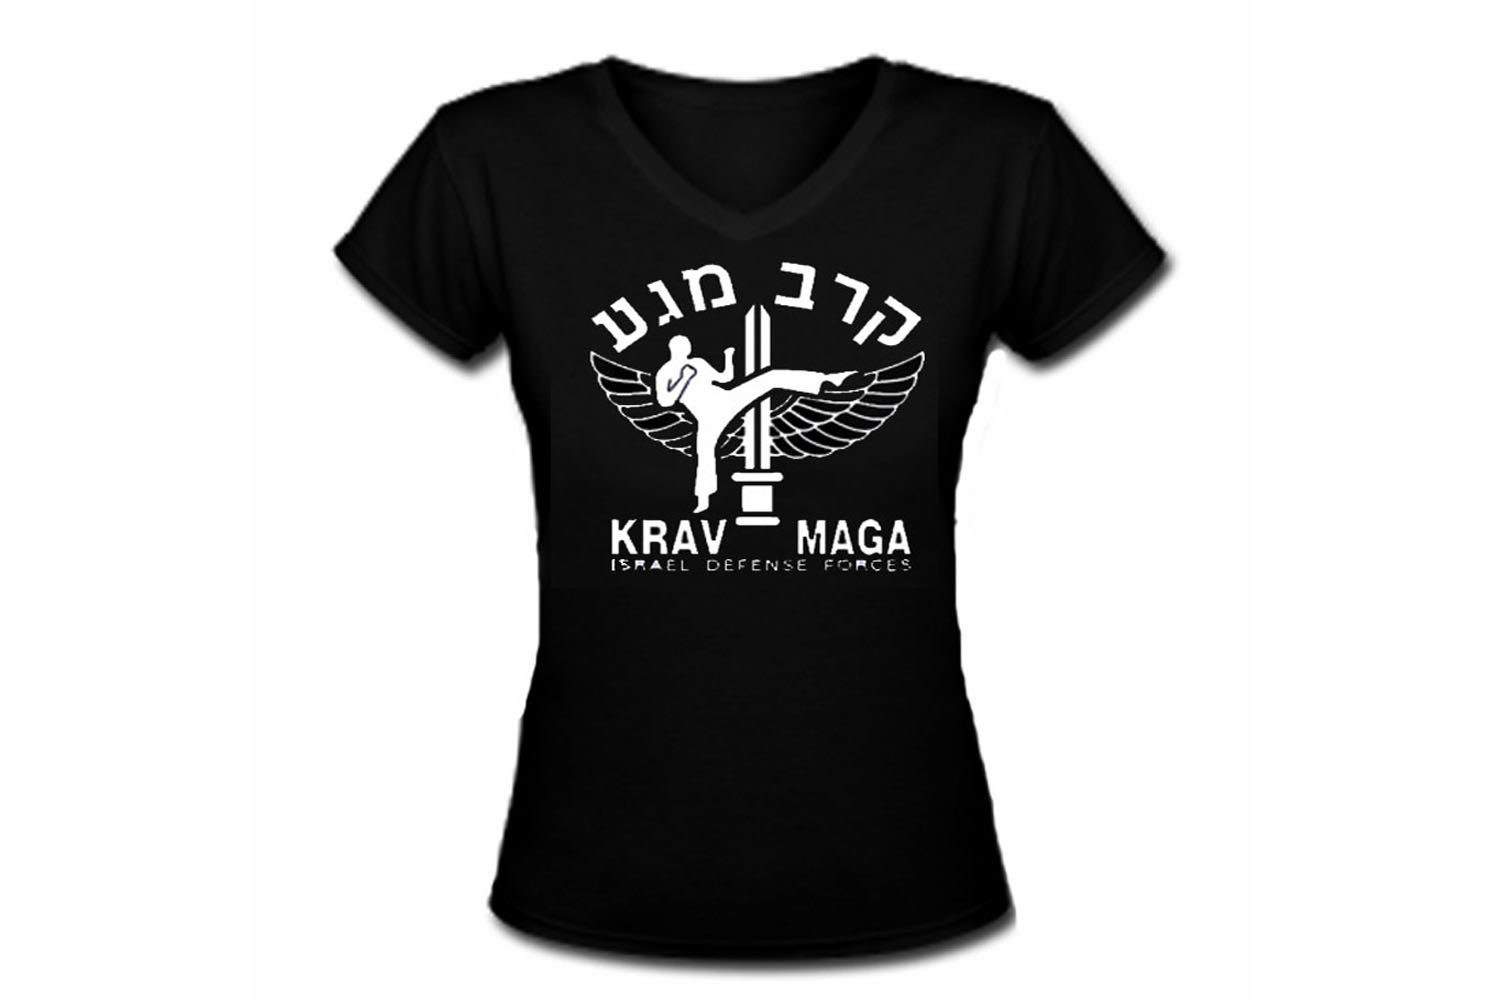 IDF Krav Maga emblem V Neck Fitted T-Shirt A